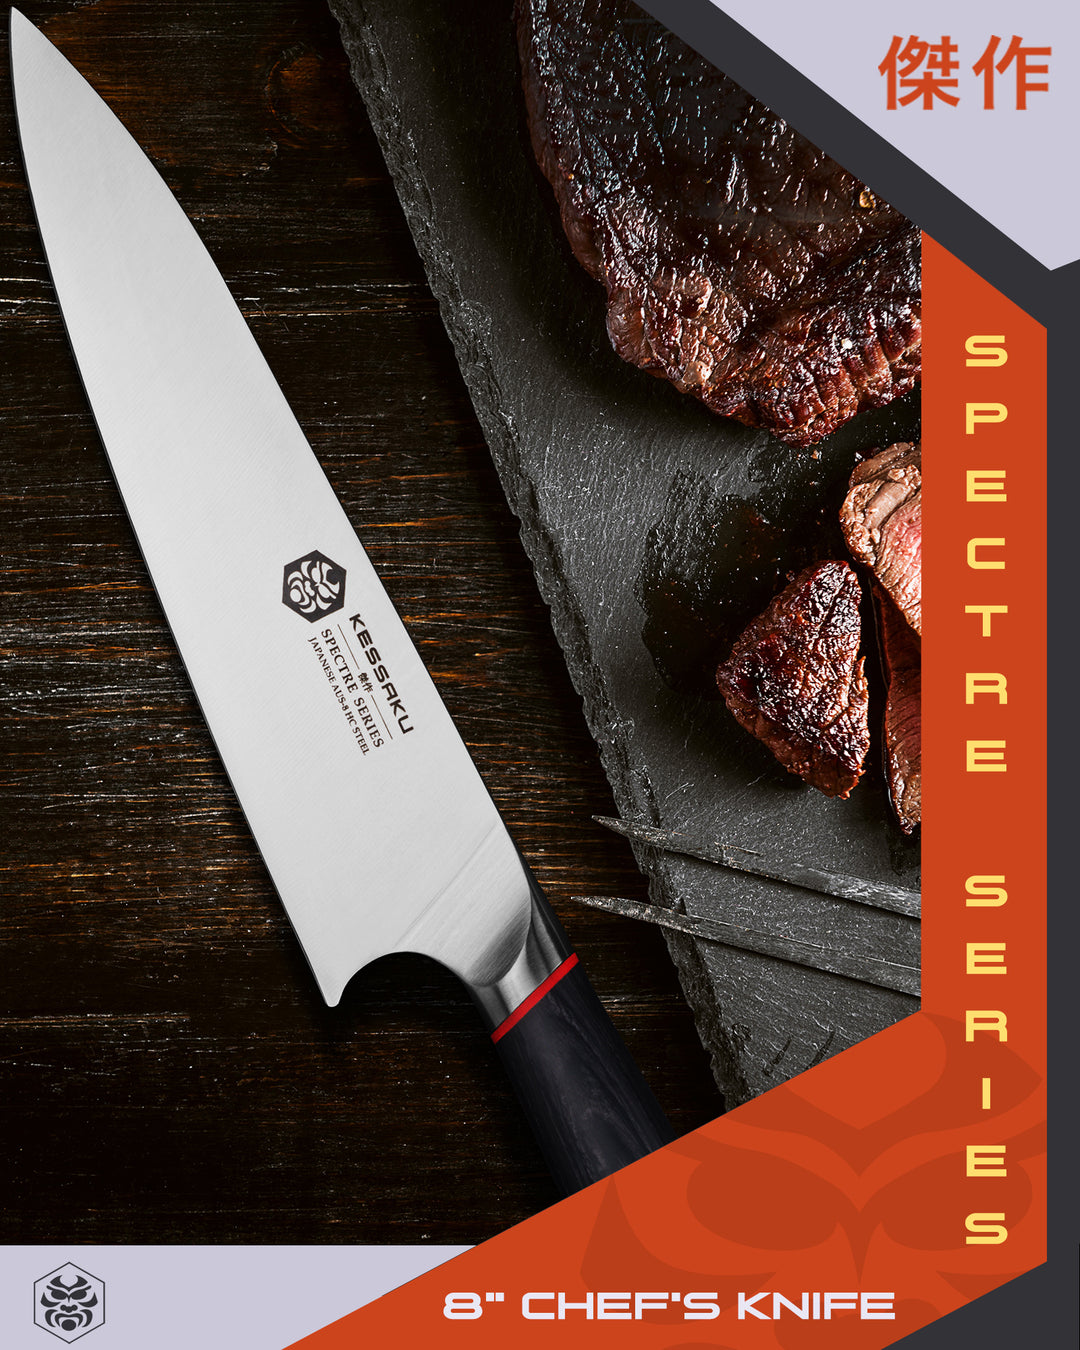 Sliced steak on slate next to the Spectre Chef's Knife